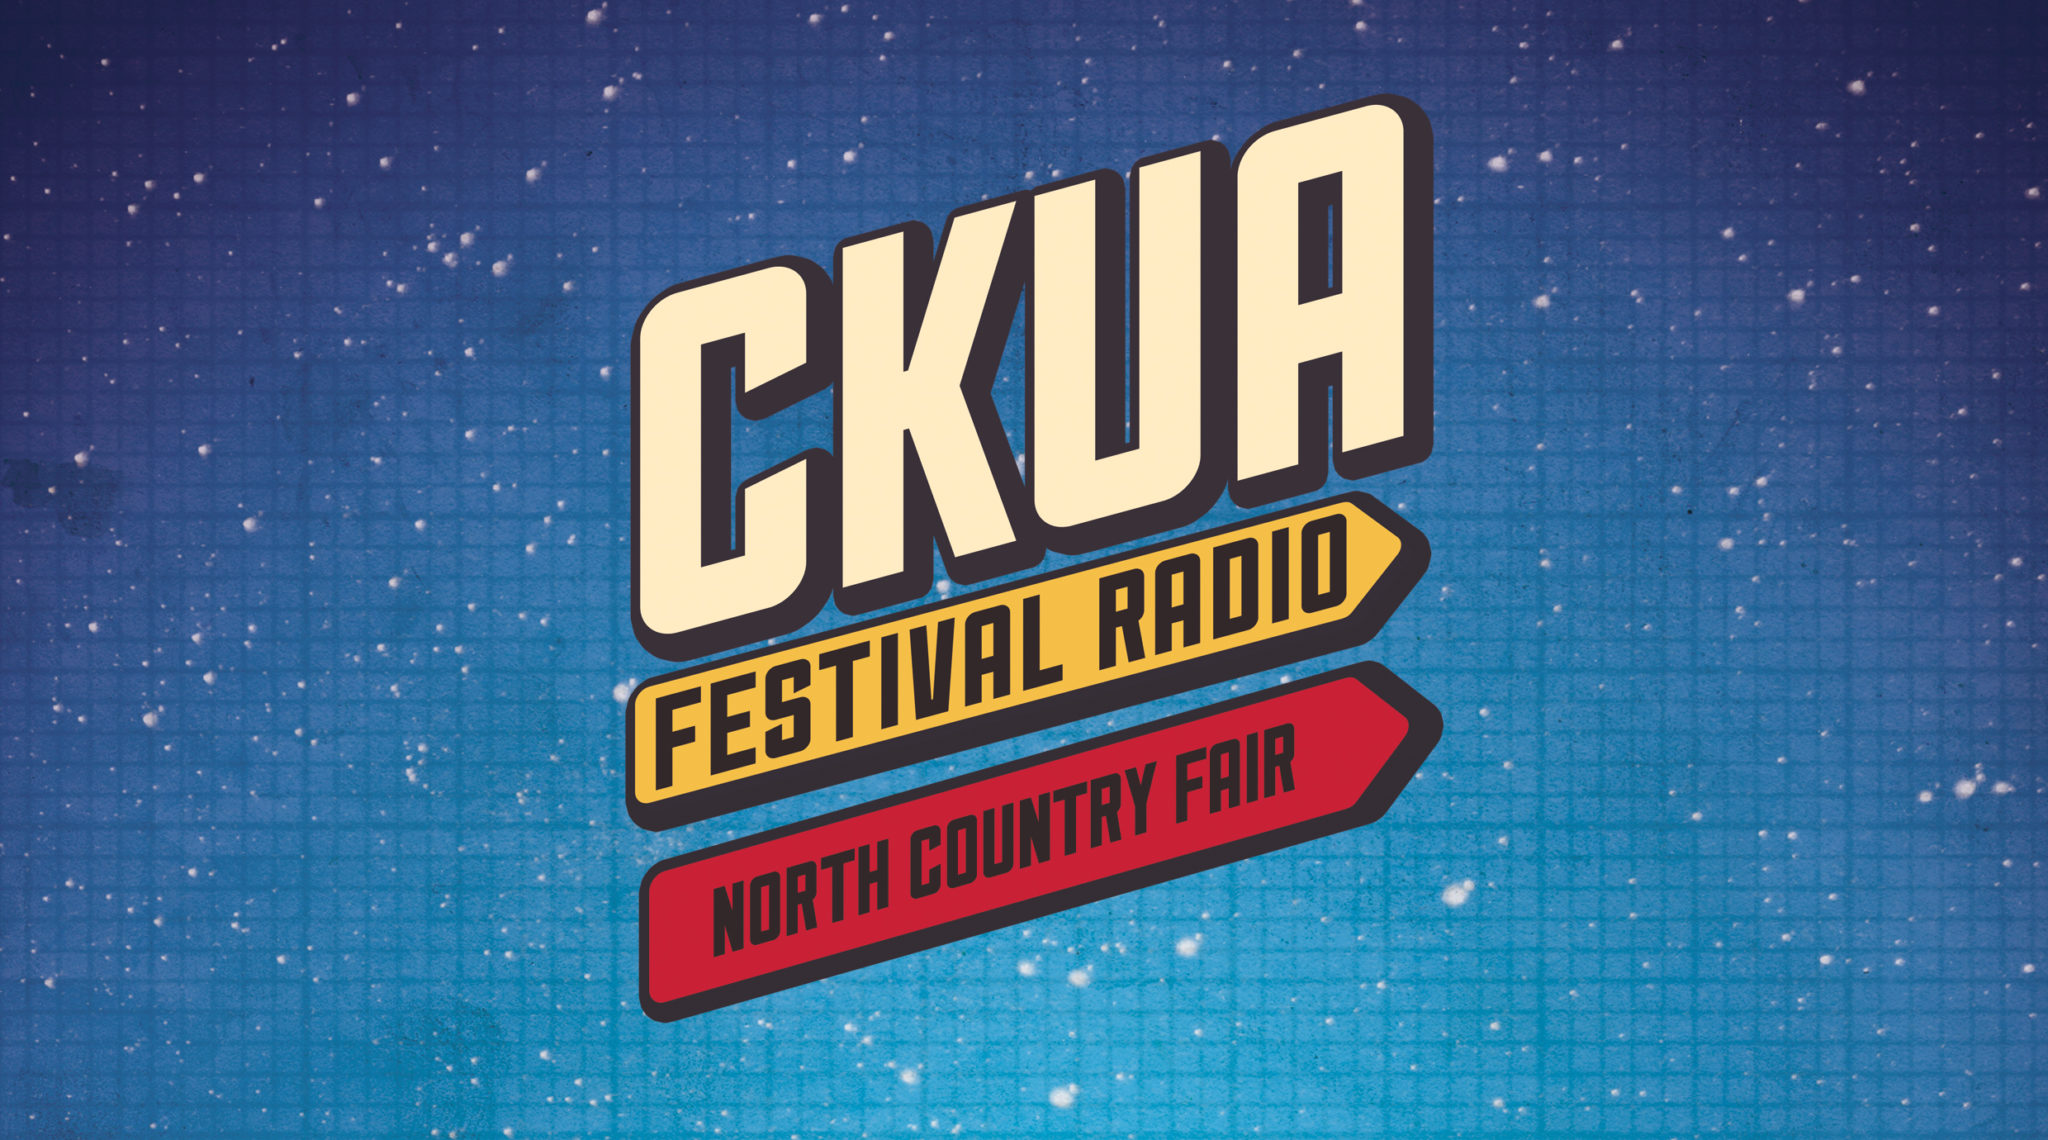 North Country Fair festival broadcast! Read CKUA